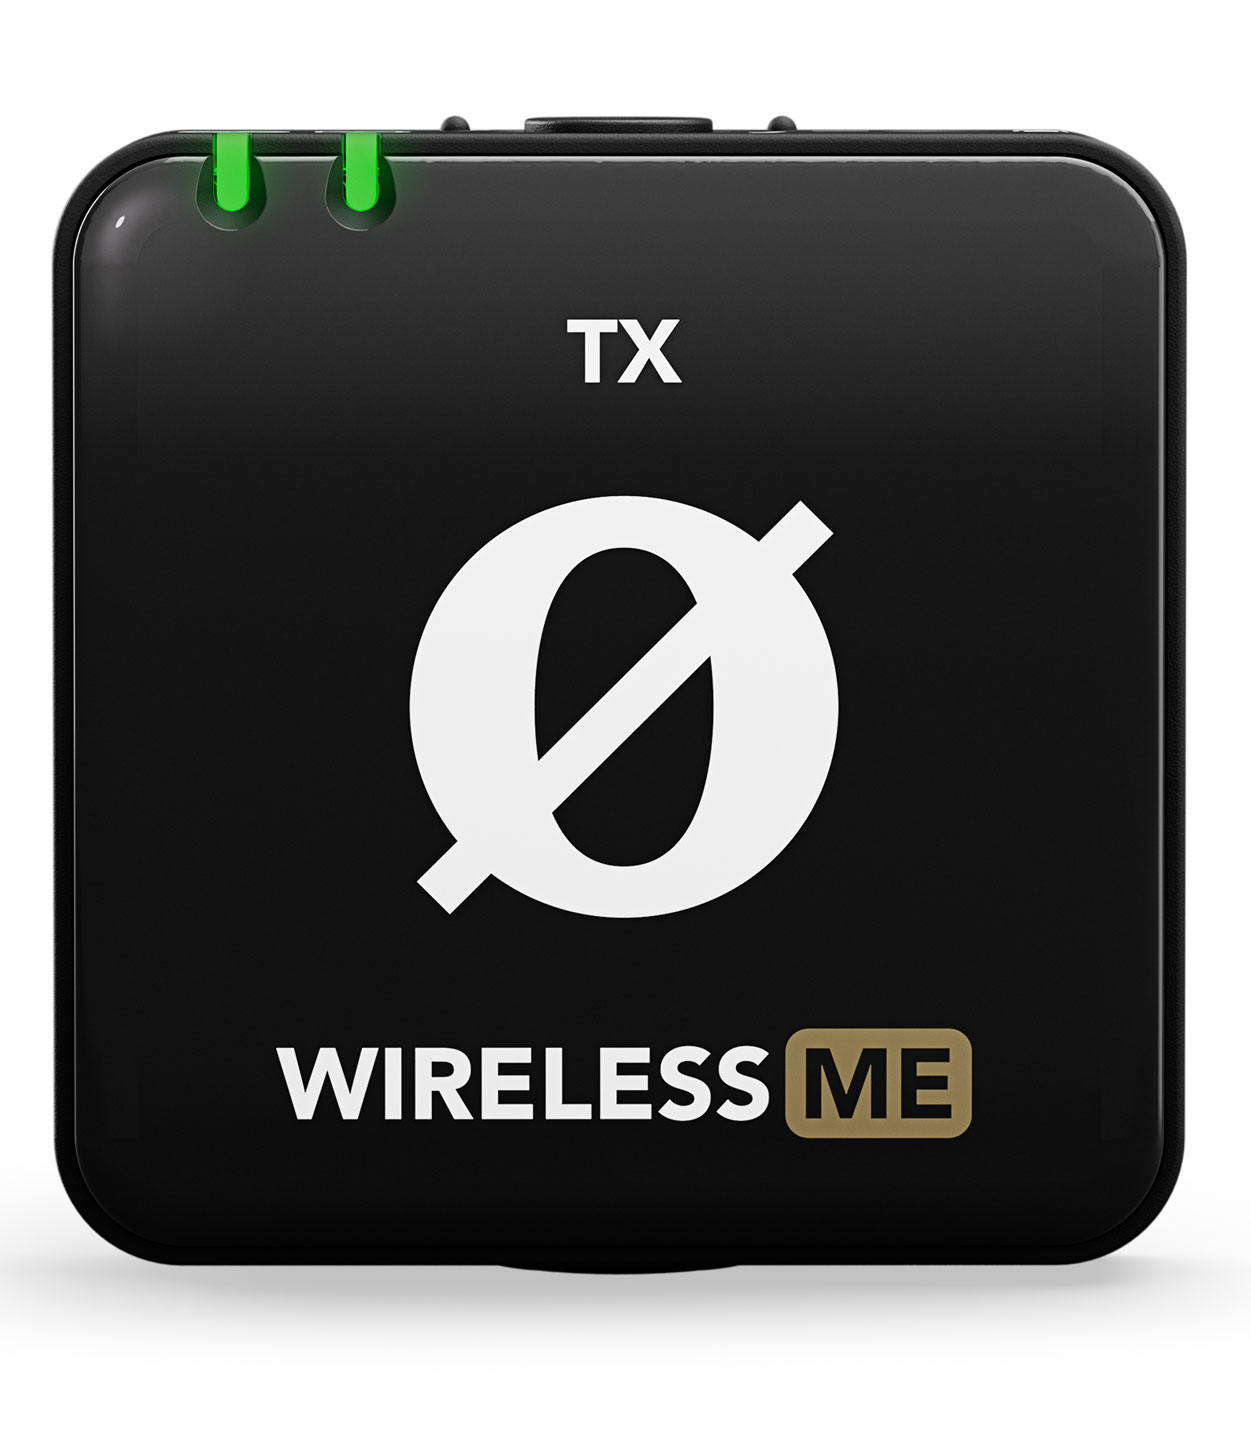 Wireless ME TX